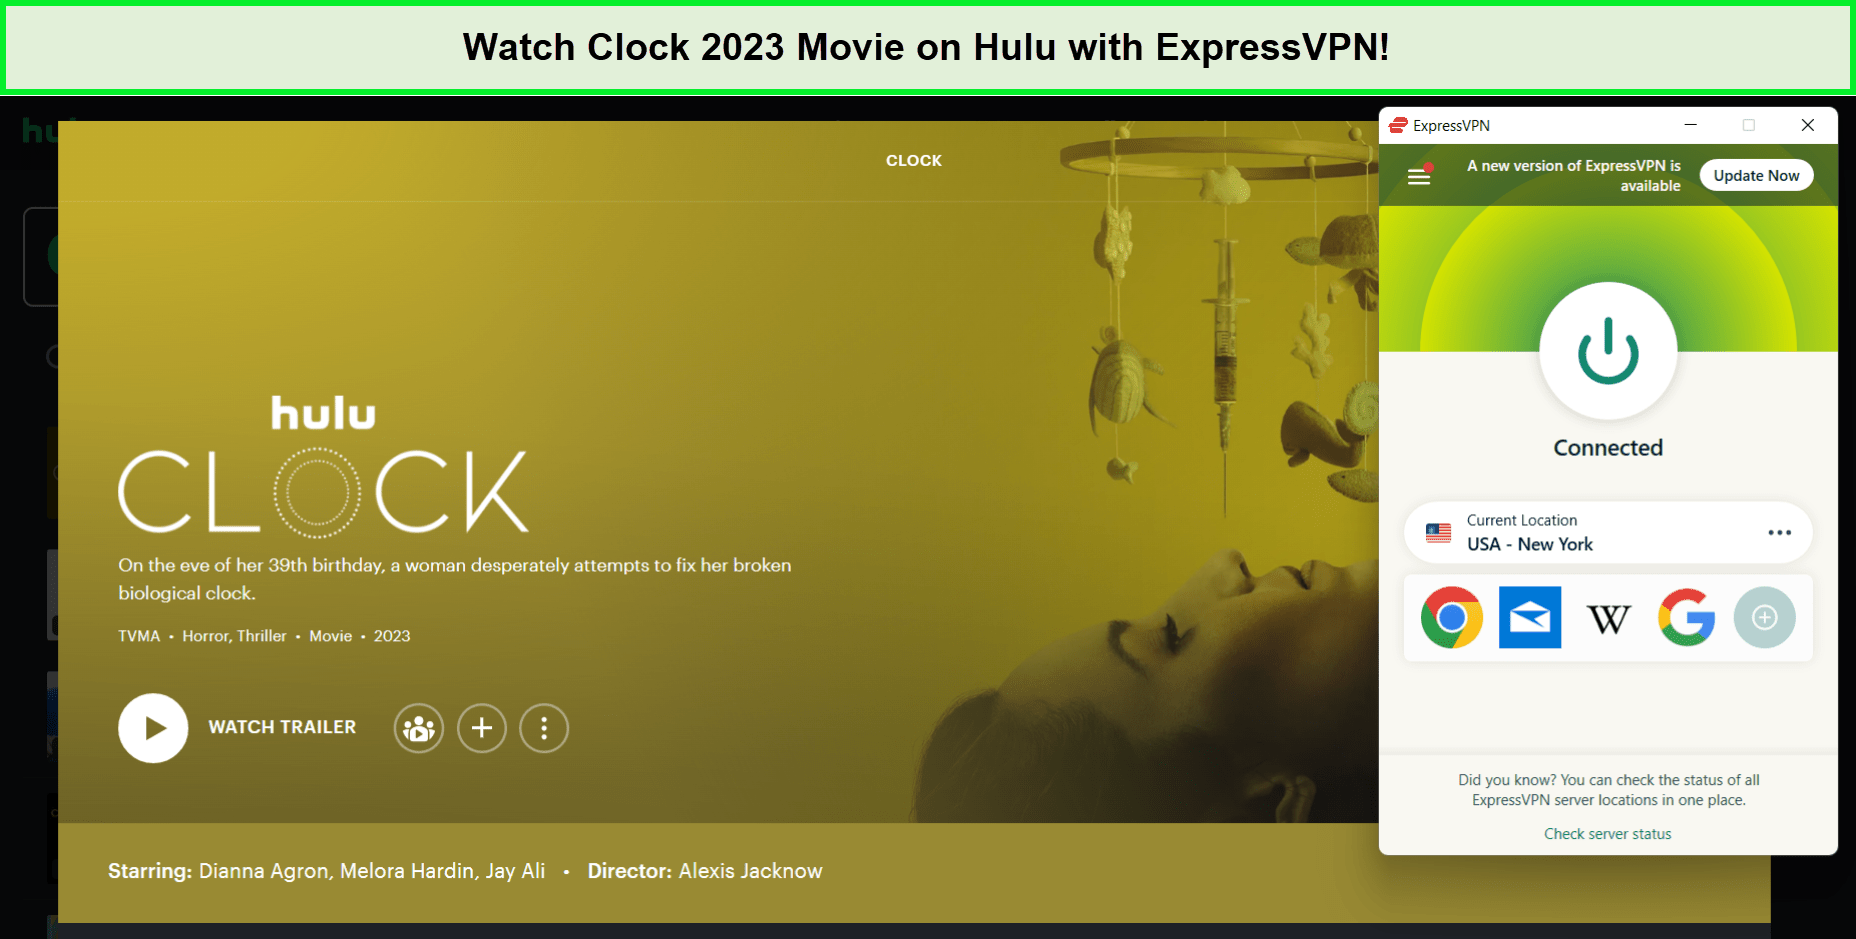 With-ExpressVPN-Watch-Clock-2023-Movie-on-Hulu-in-South Korea